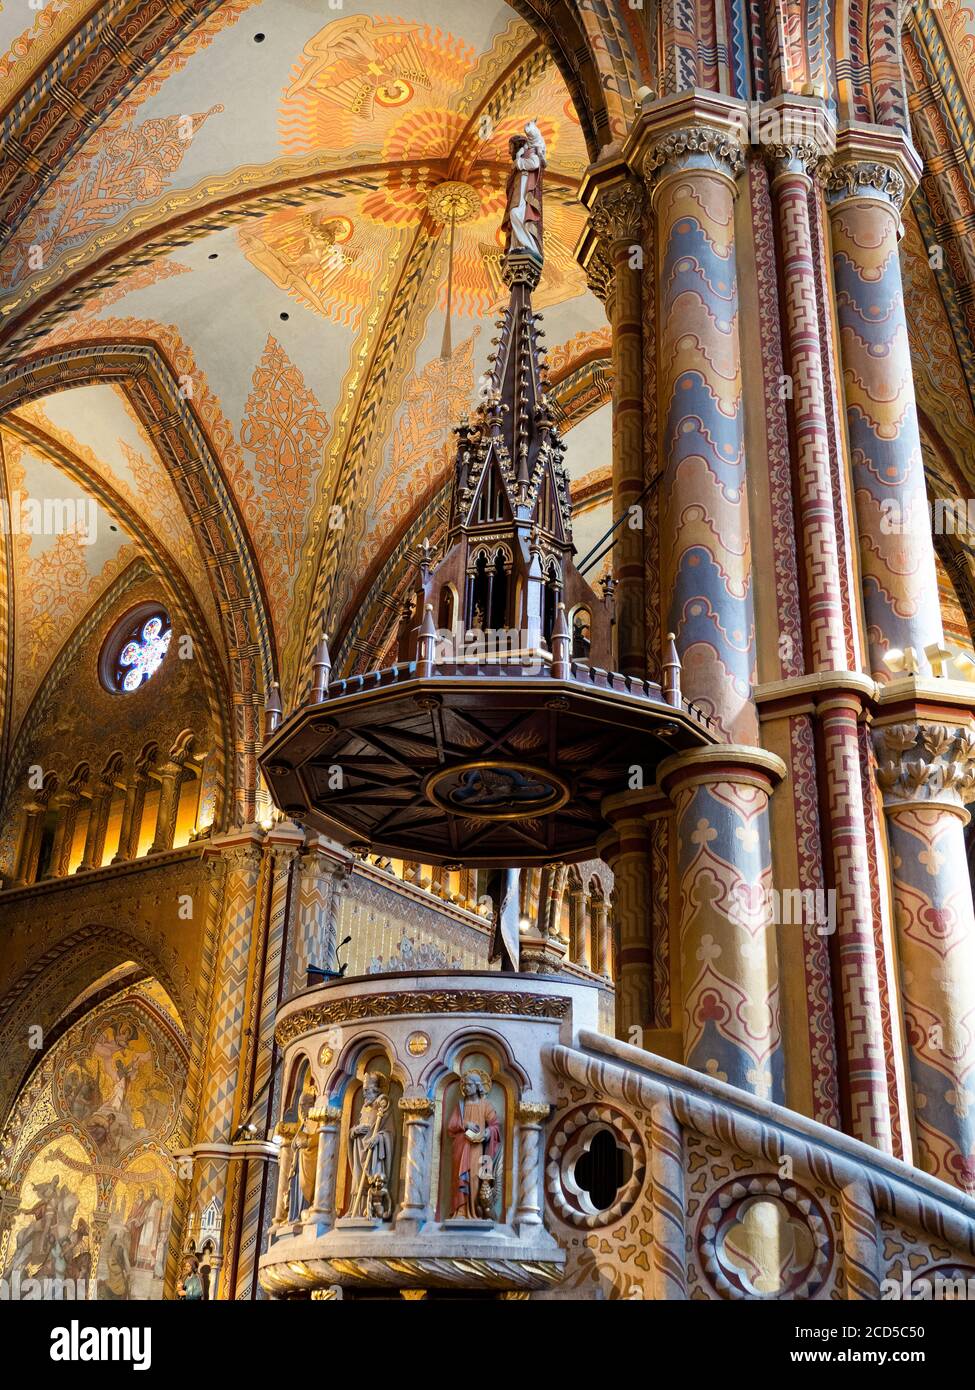 Vista del interior de la iglesia, Buda, Budapest, Hungría Foto de stock